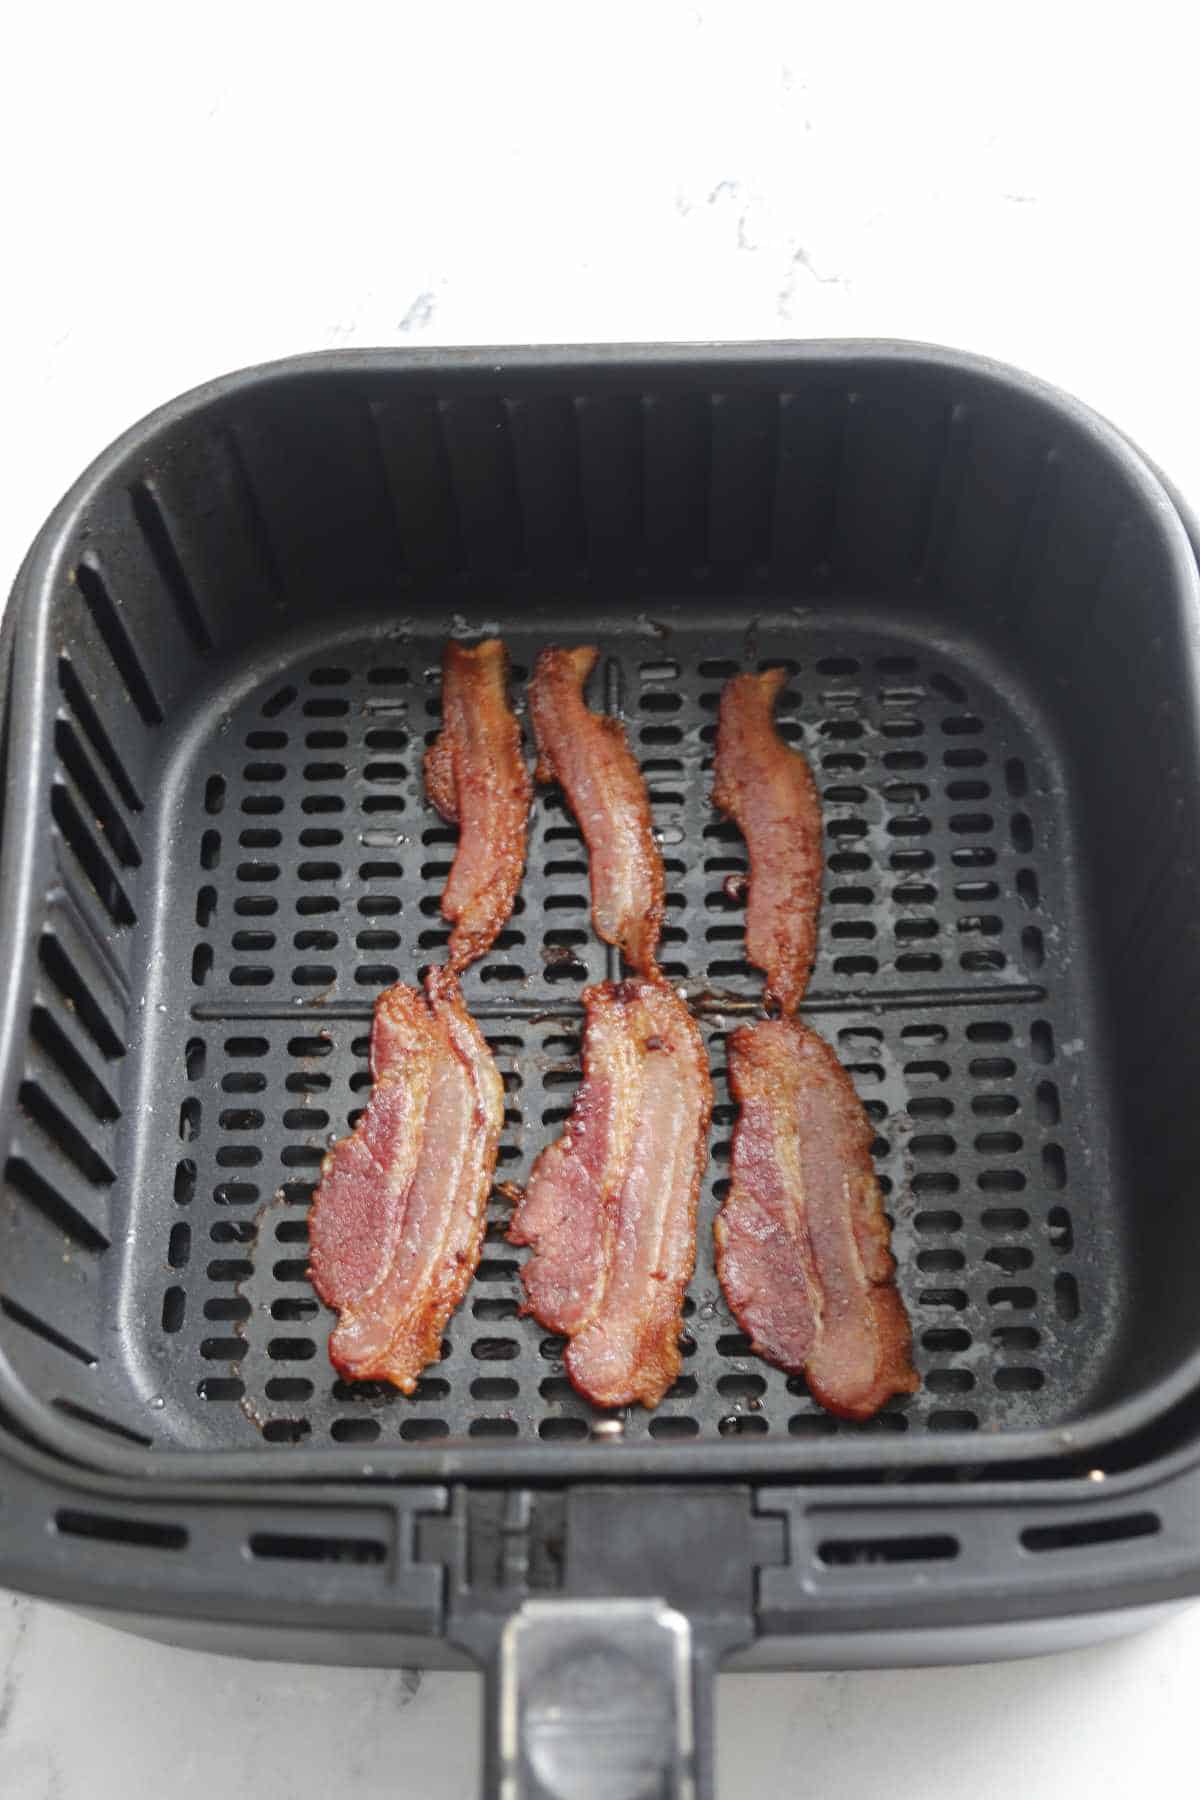 bacon in an air fryer basket.